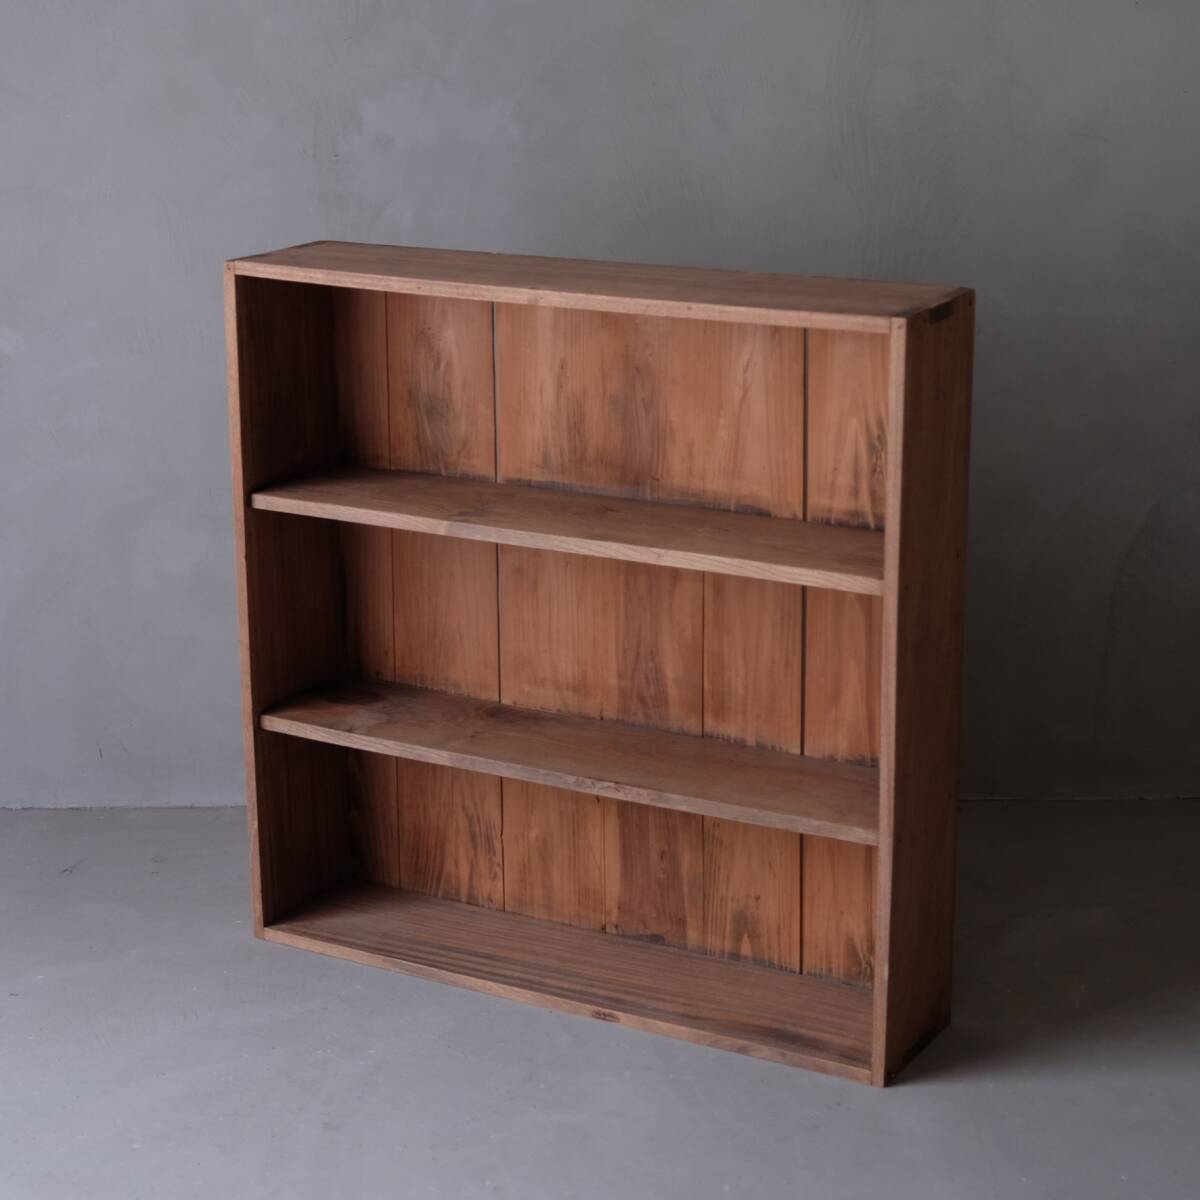 02983la one material 3 step bookcase / book shelf display case storage shelves old furniture antique retro 